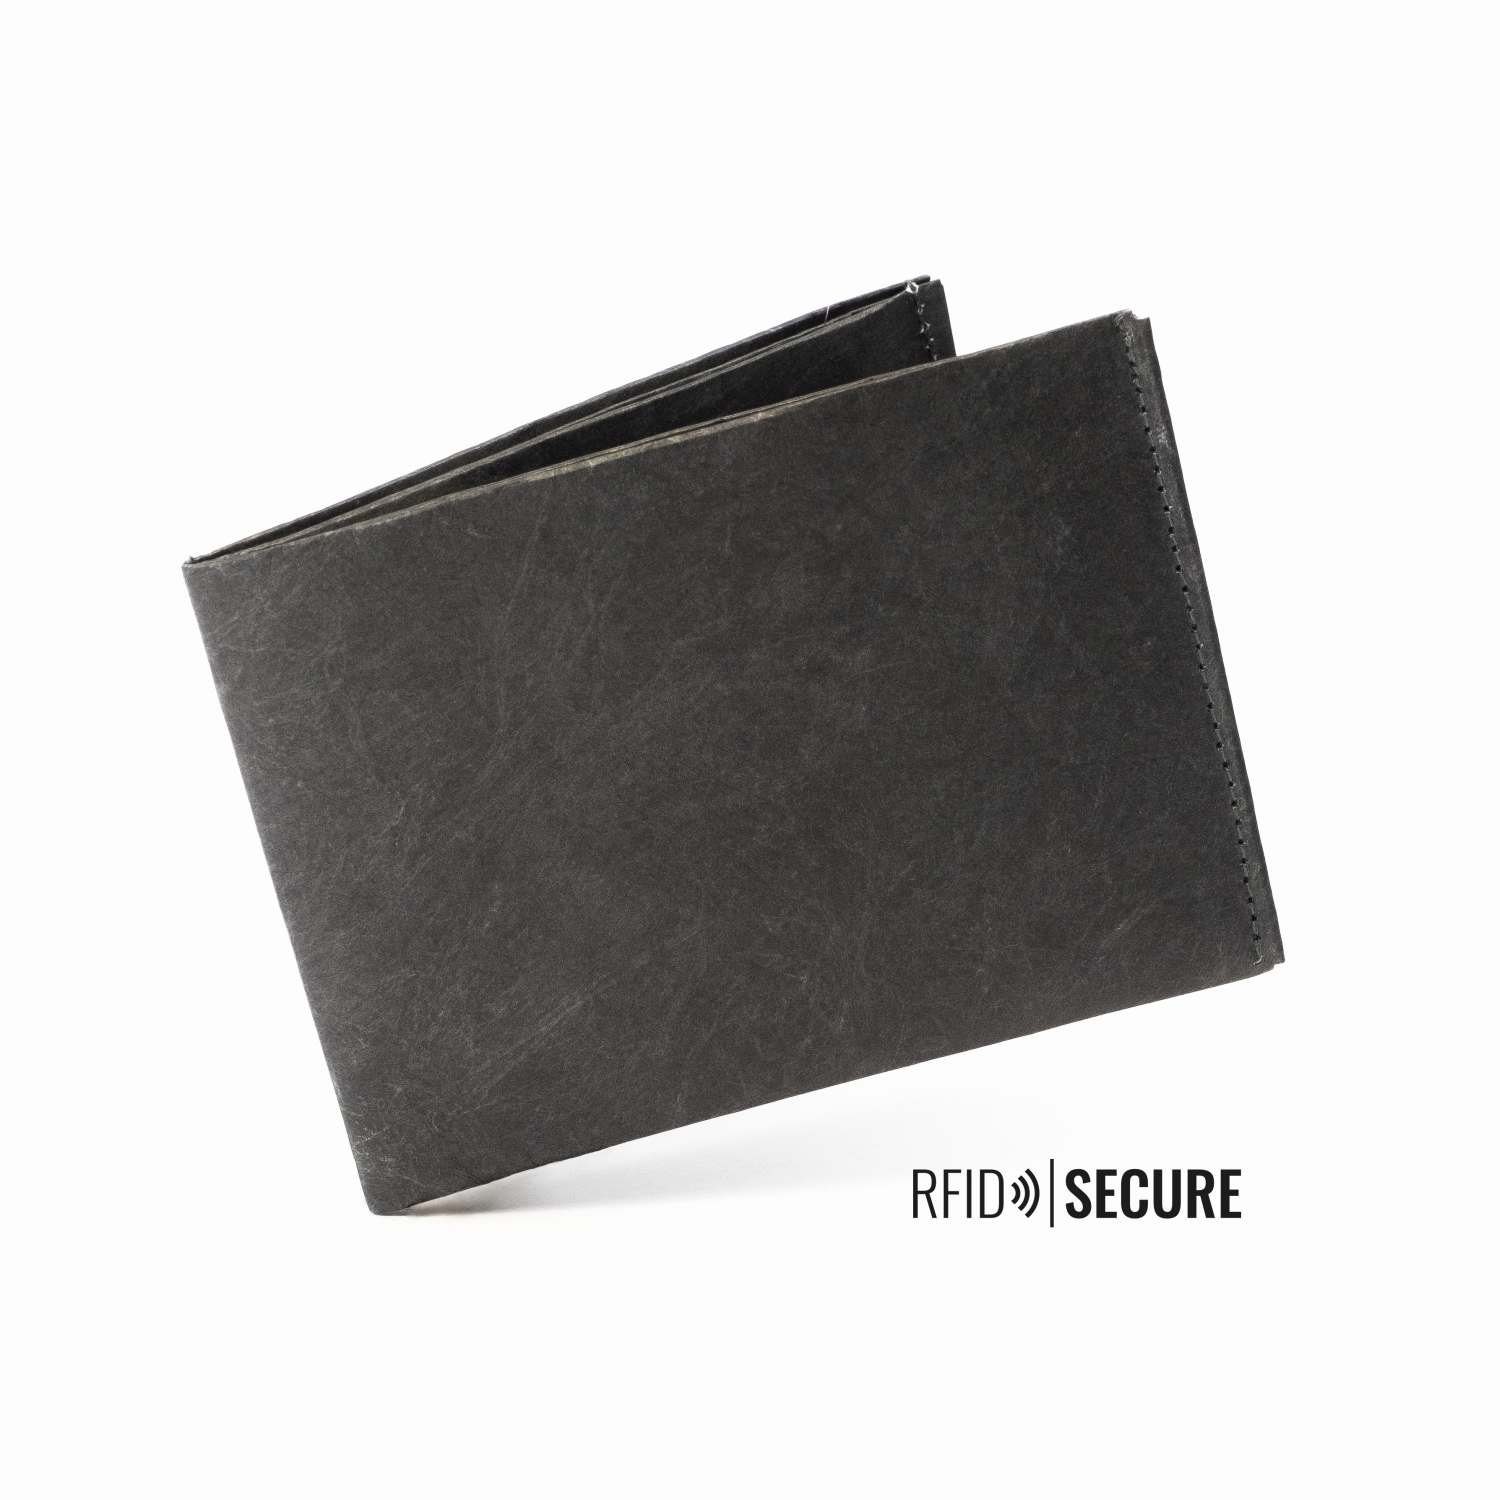 Paprcuts paprcuts Portemonnaie RFID Secure - Just Black Babystiefel